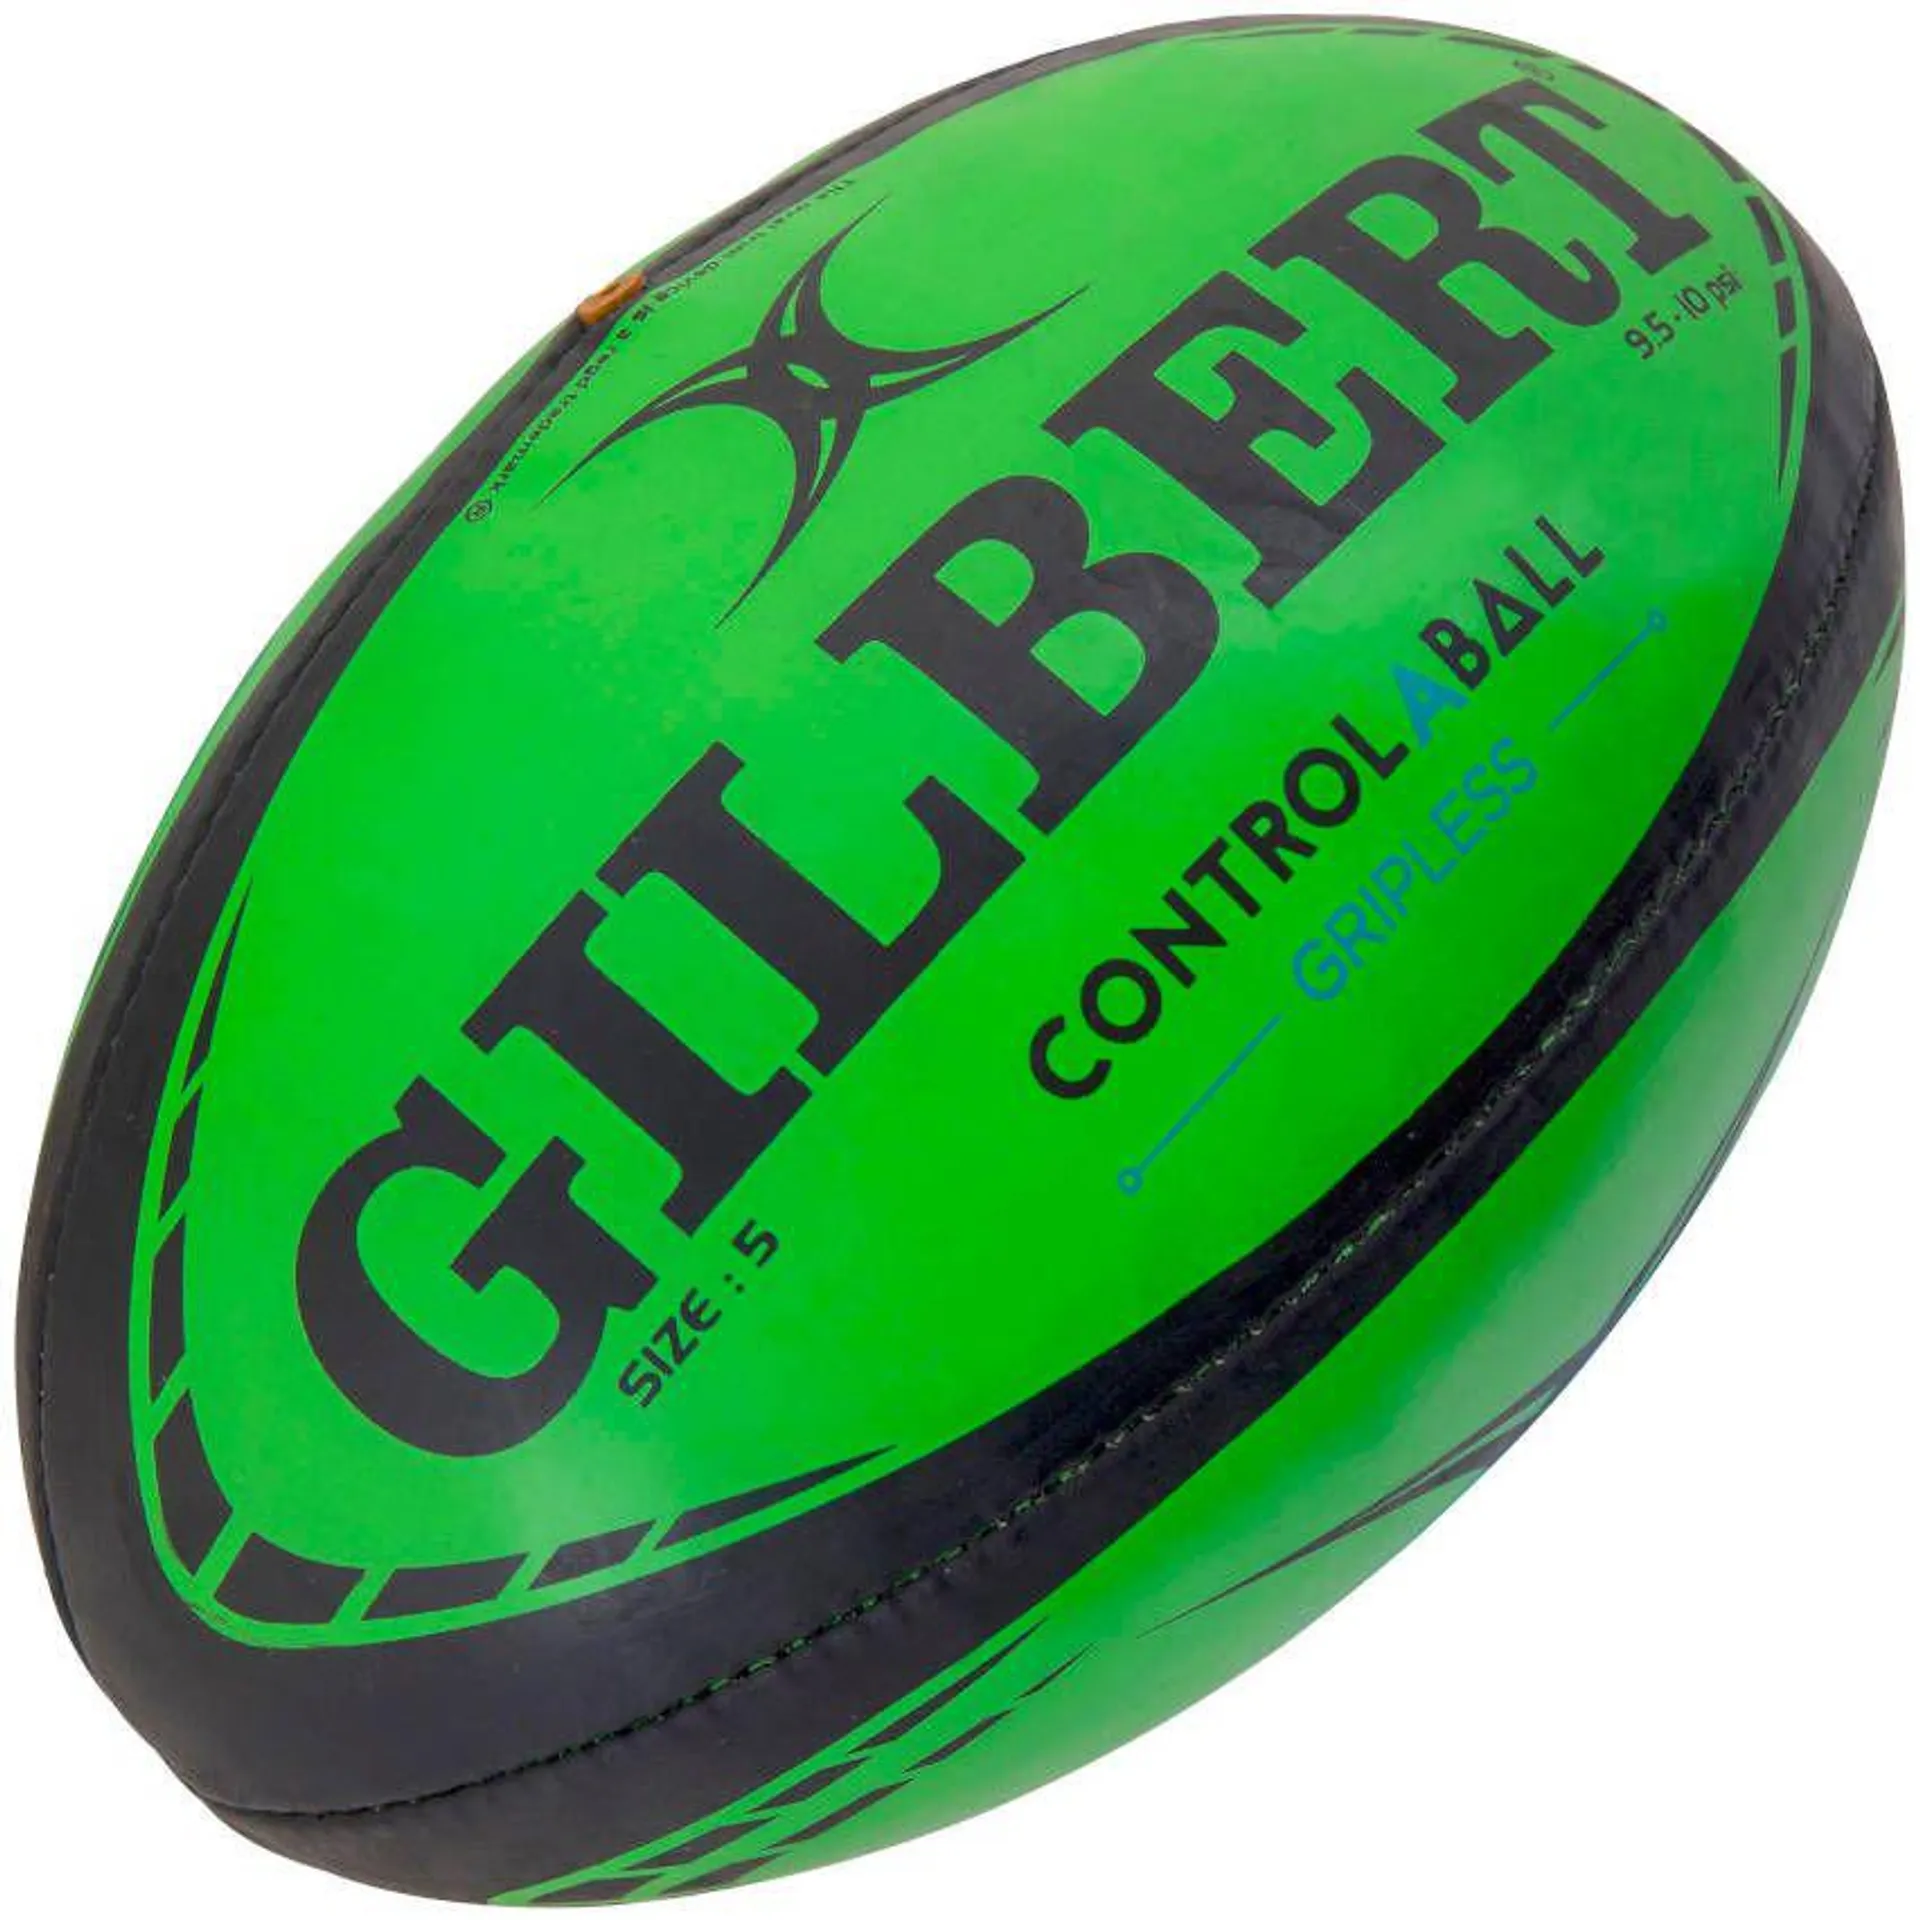 Ballon Rugby Control A Sans Grip Taille 5 - Gilbert